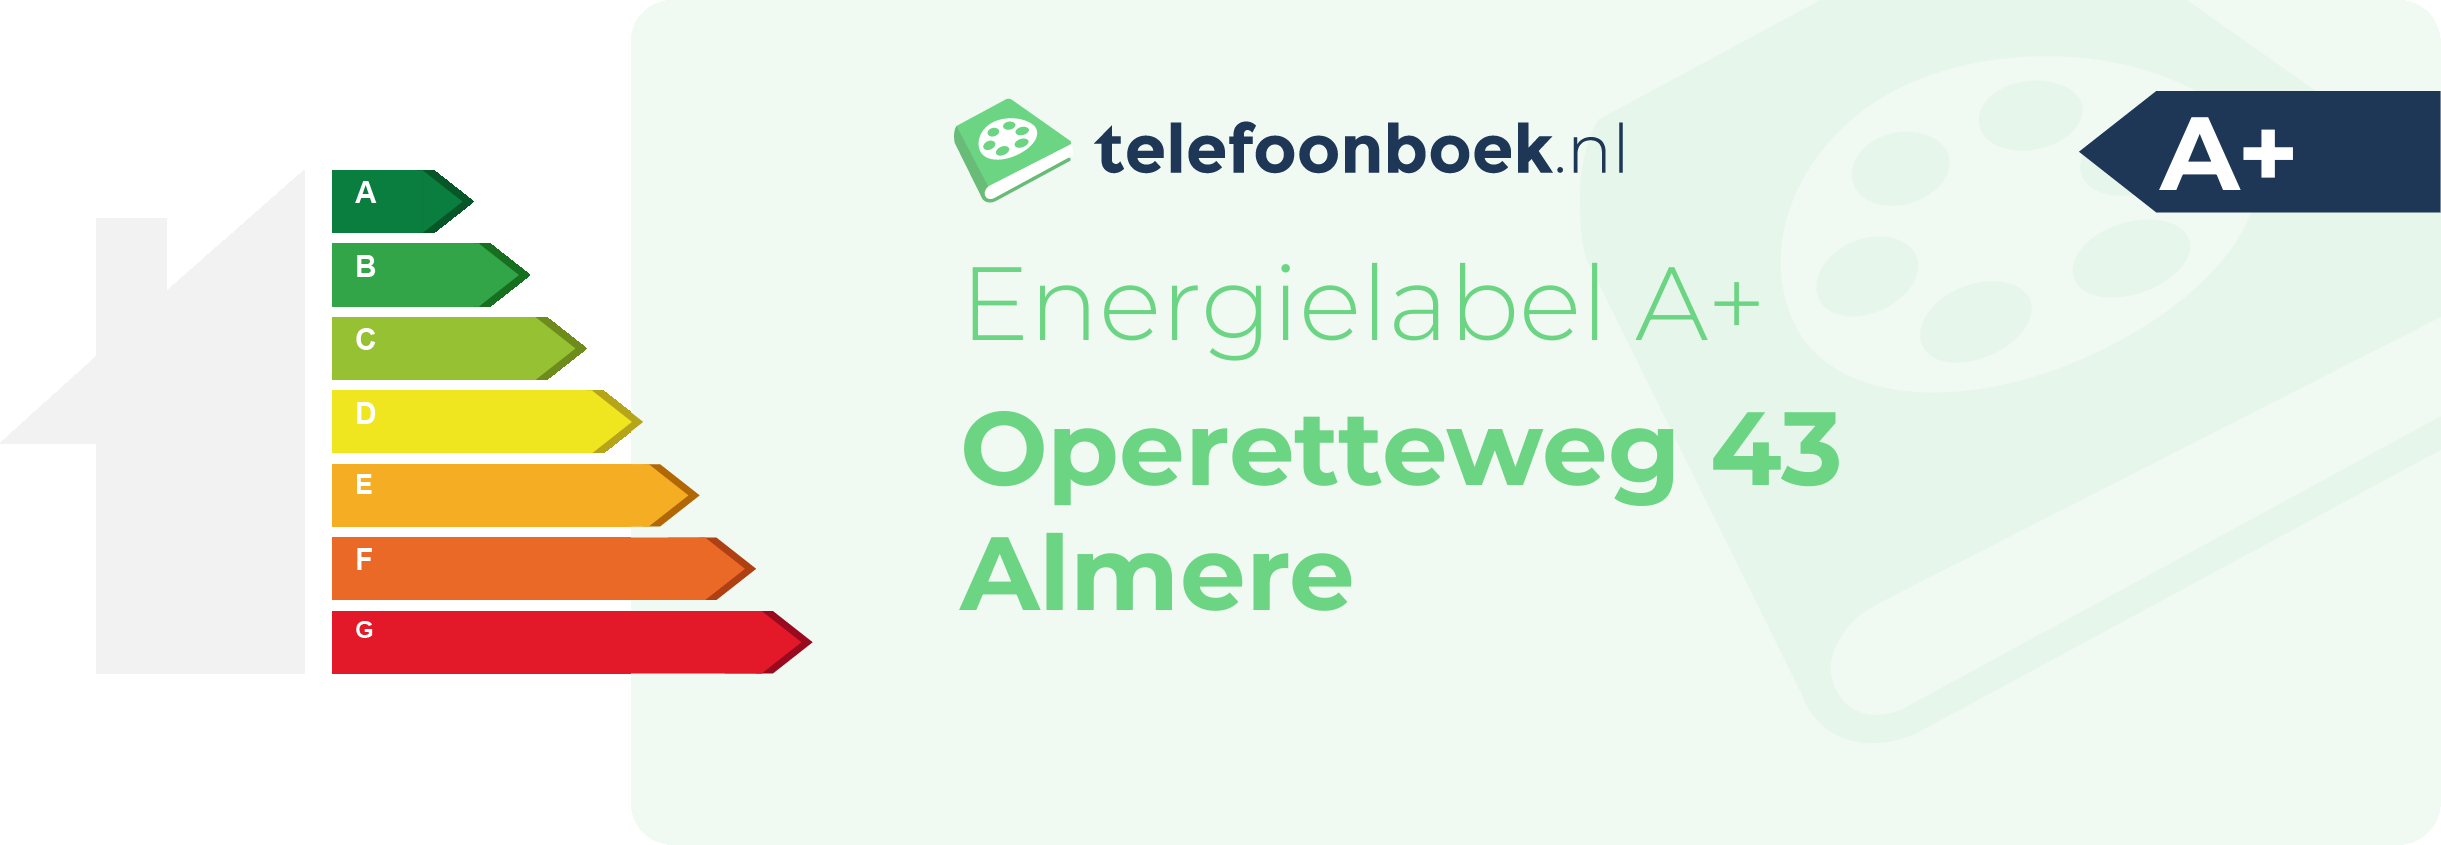 Energielabel Operetteweg 43 Almere